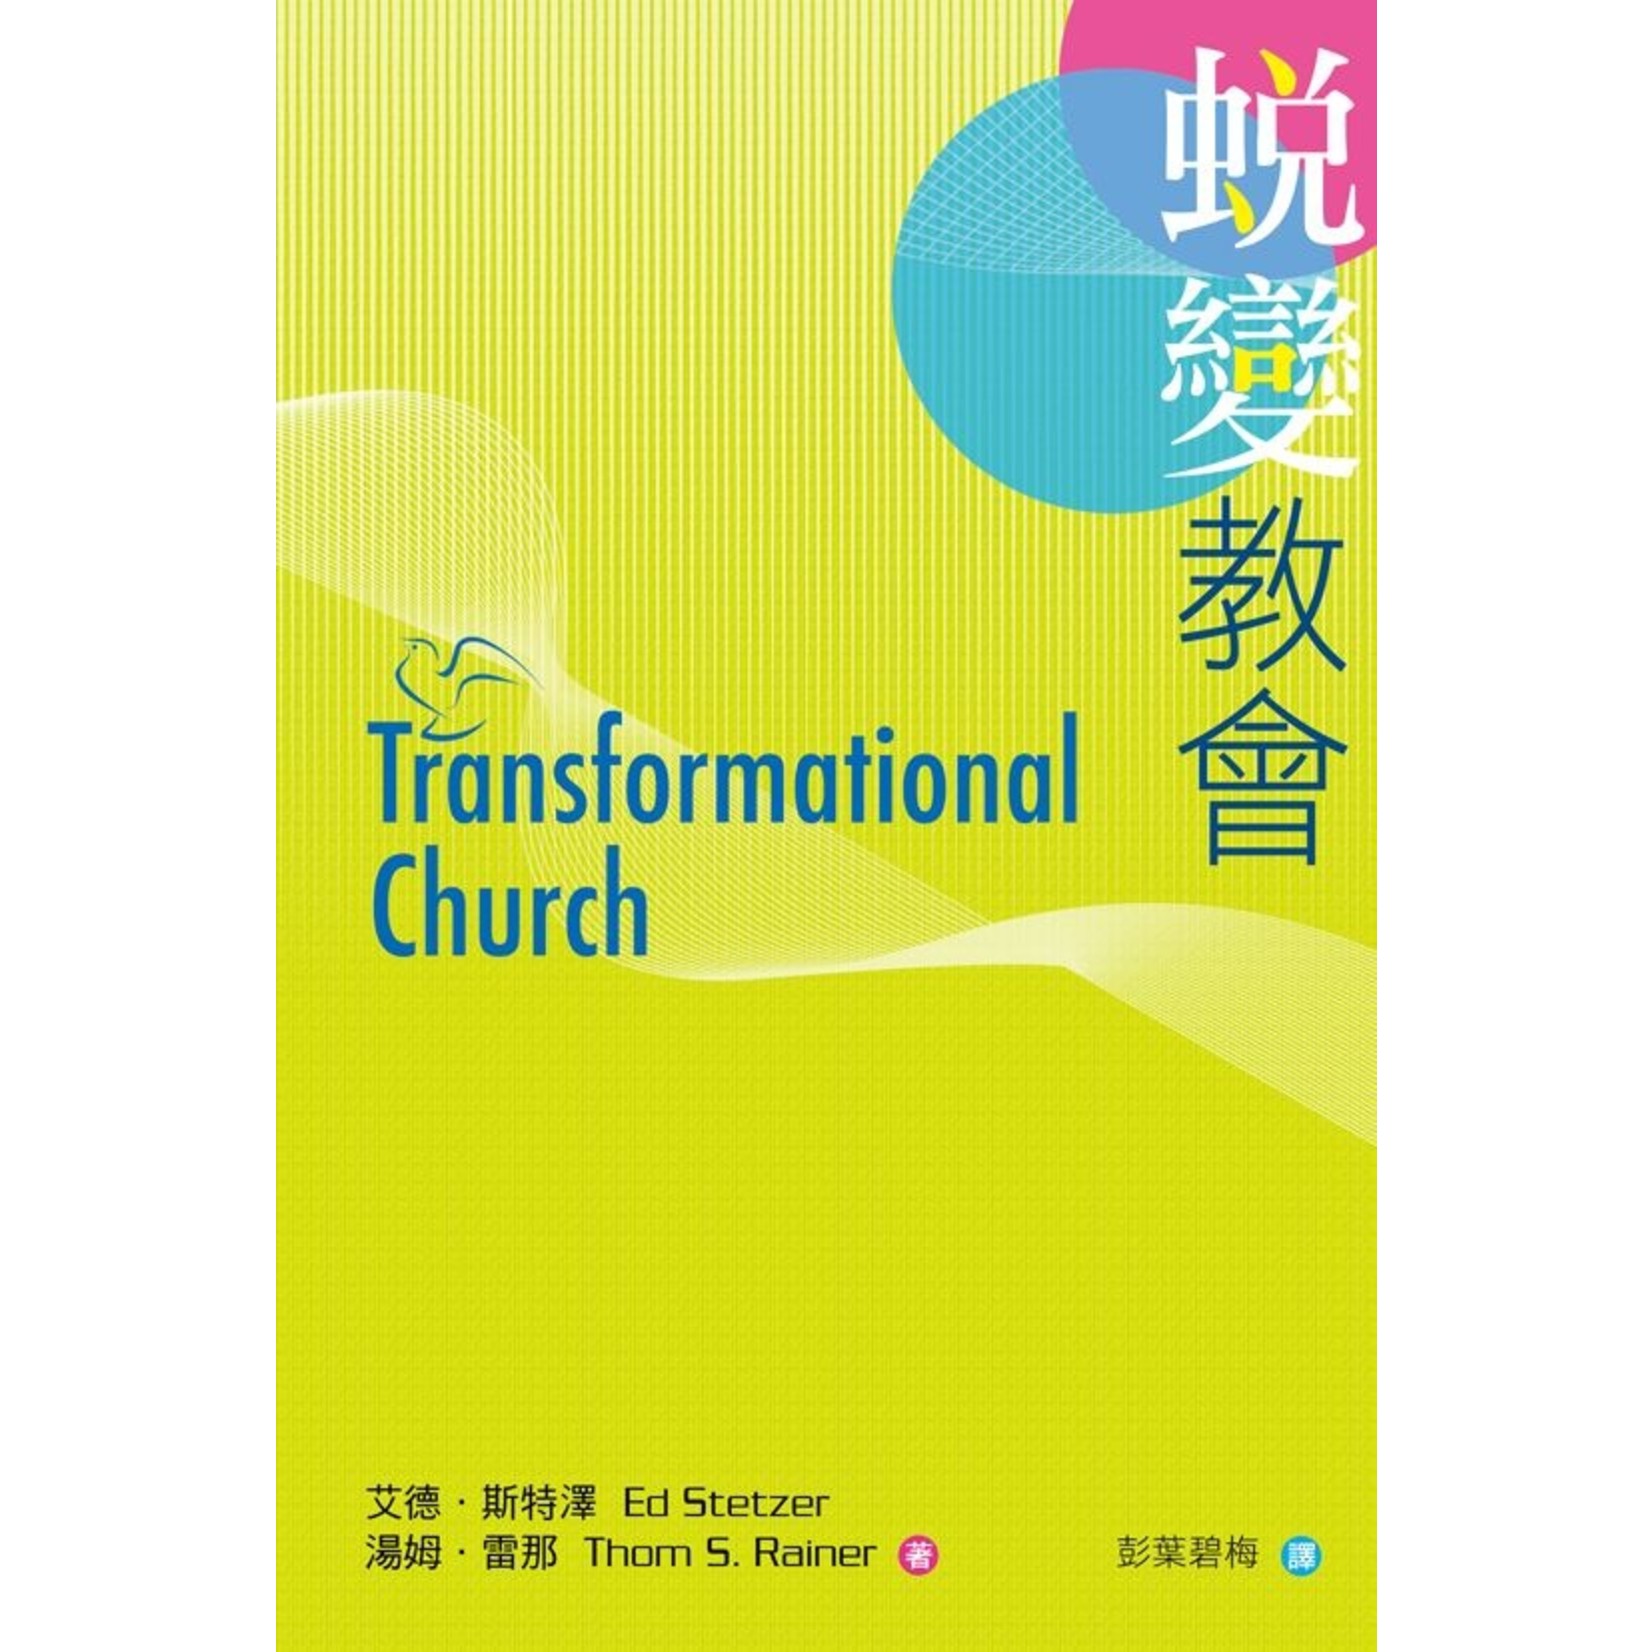 天道書樓 Tien Dao Publishing House 蛻變教會 Transformational Church